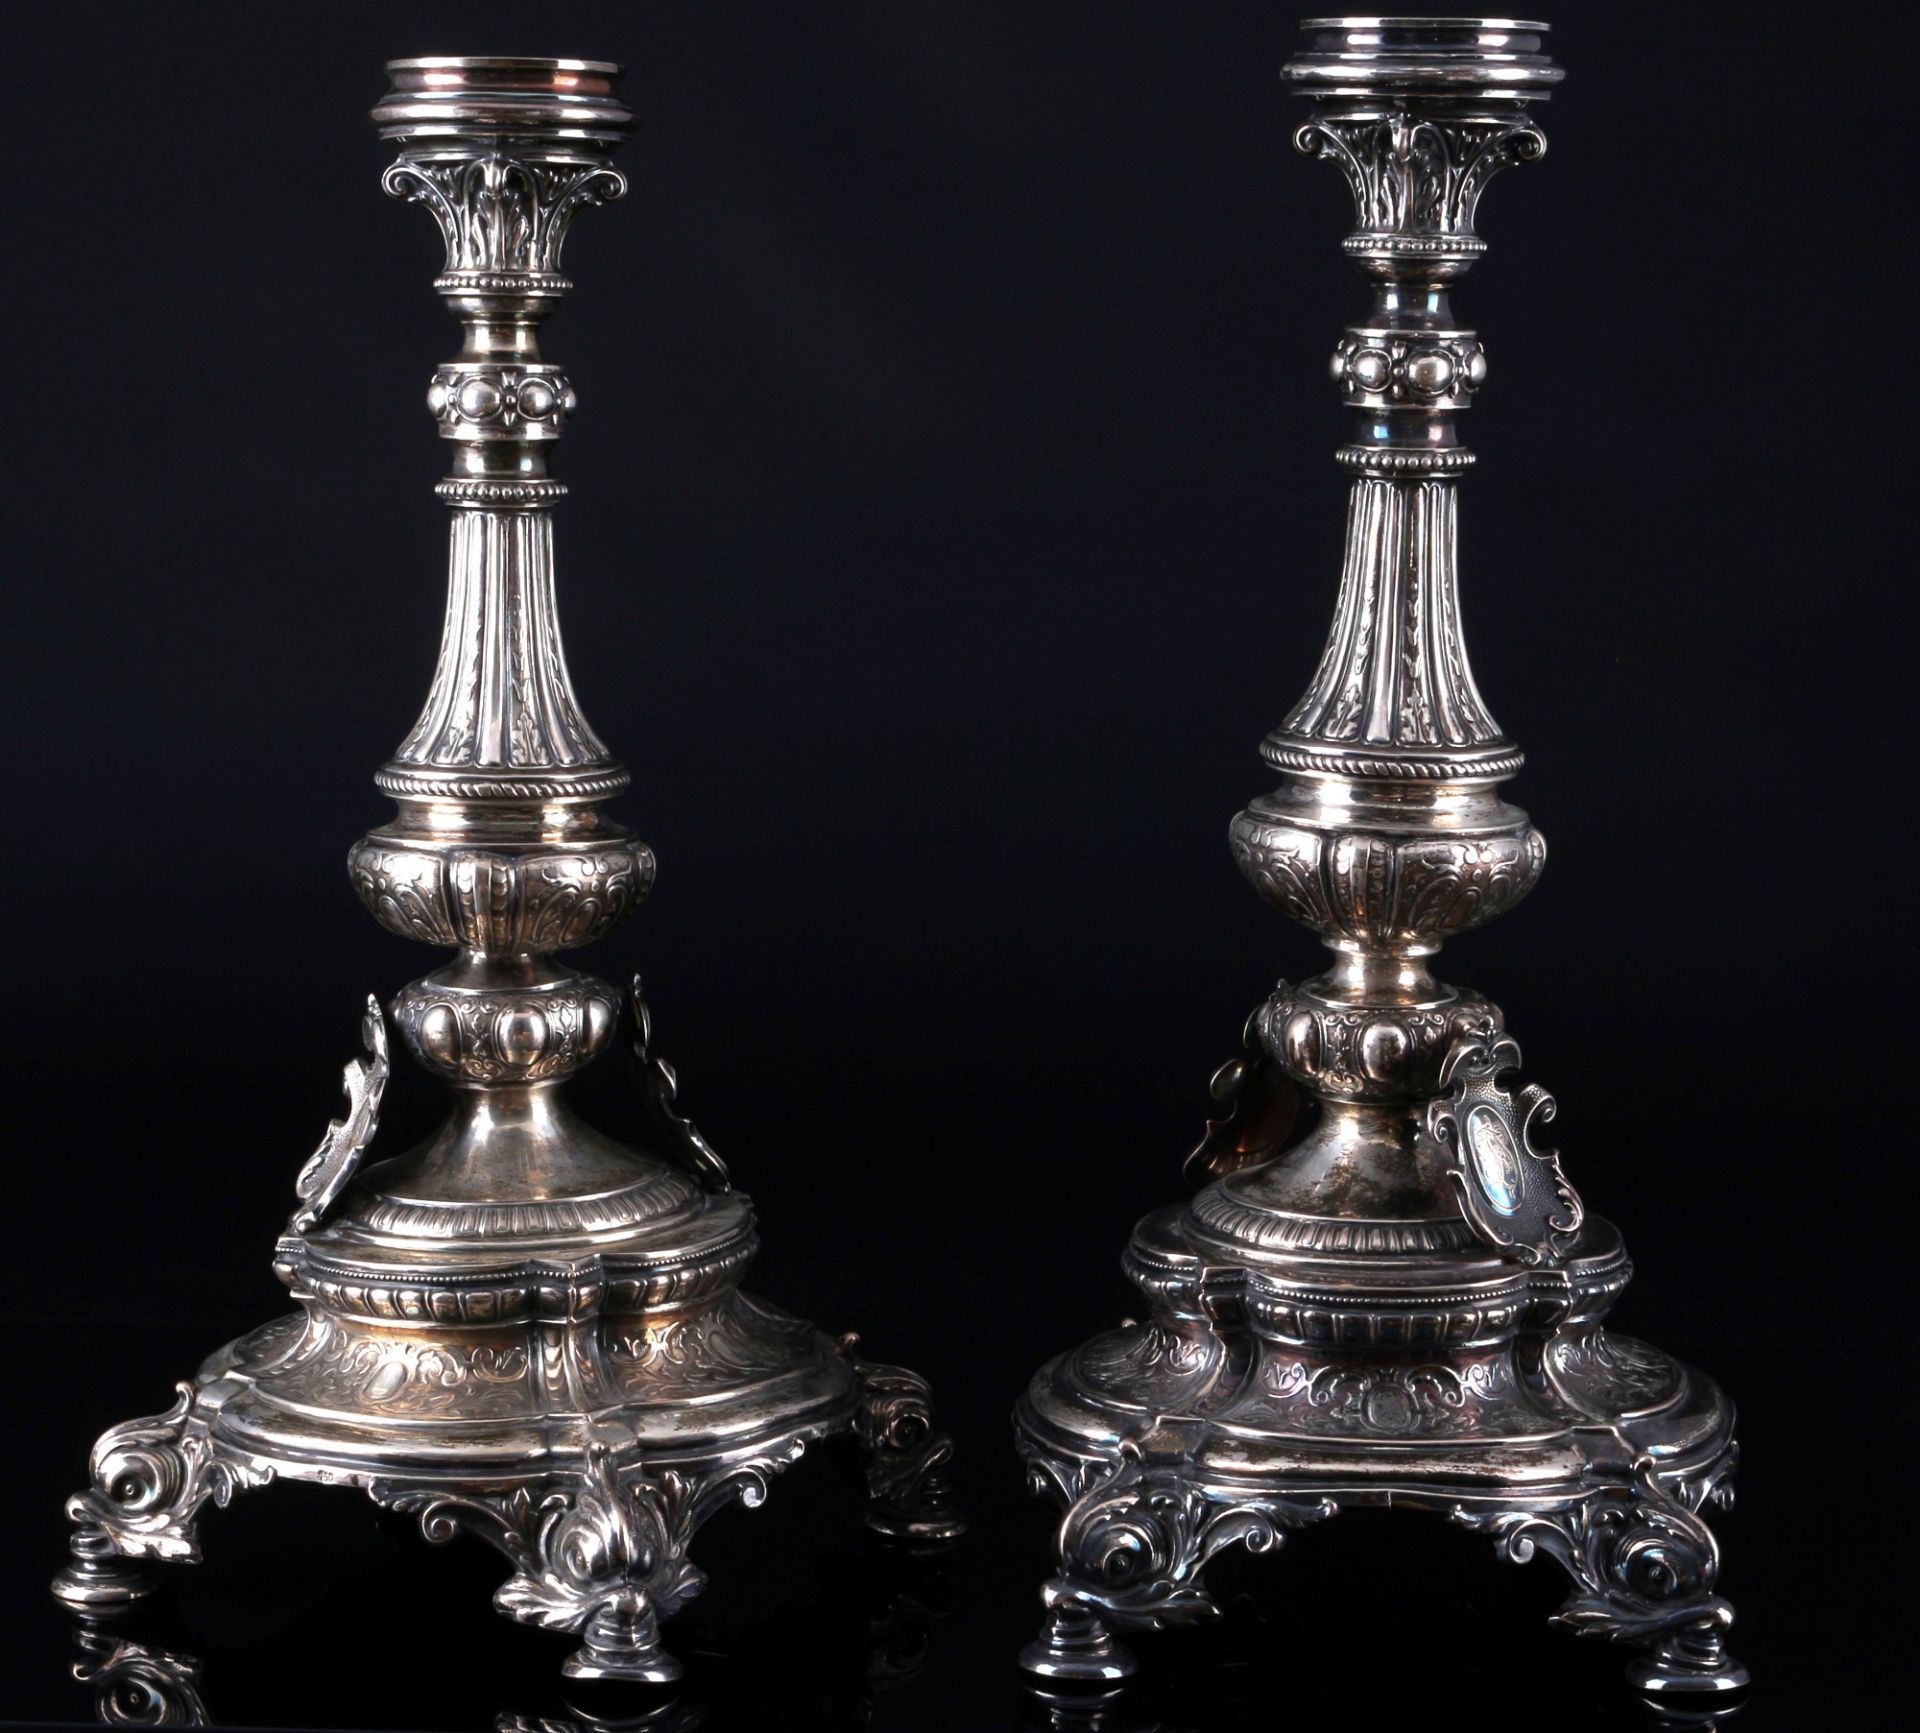 750 silver pair of large candlesticks 19th century, großes Paar Silber Kerzenständer 19. Jahrhundert - Image 4 of 6